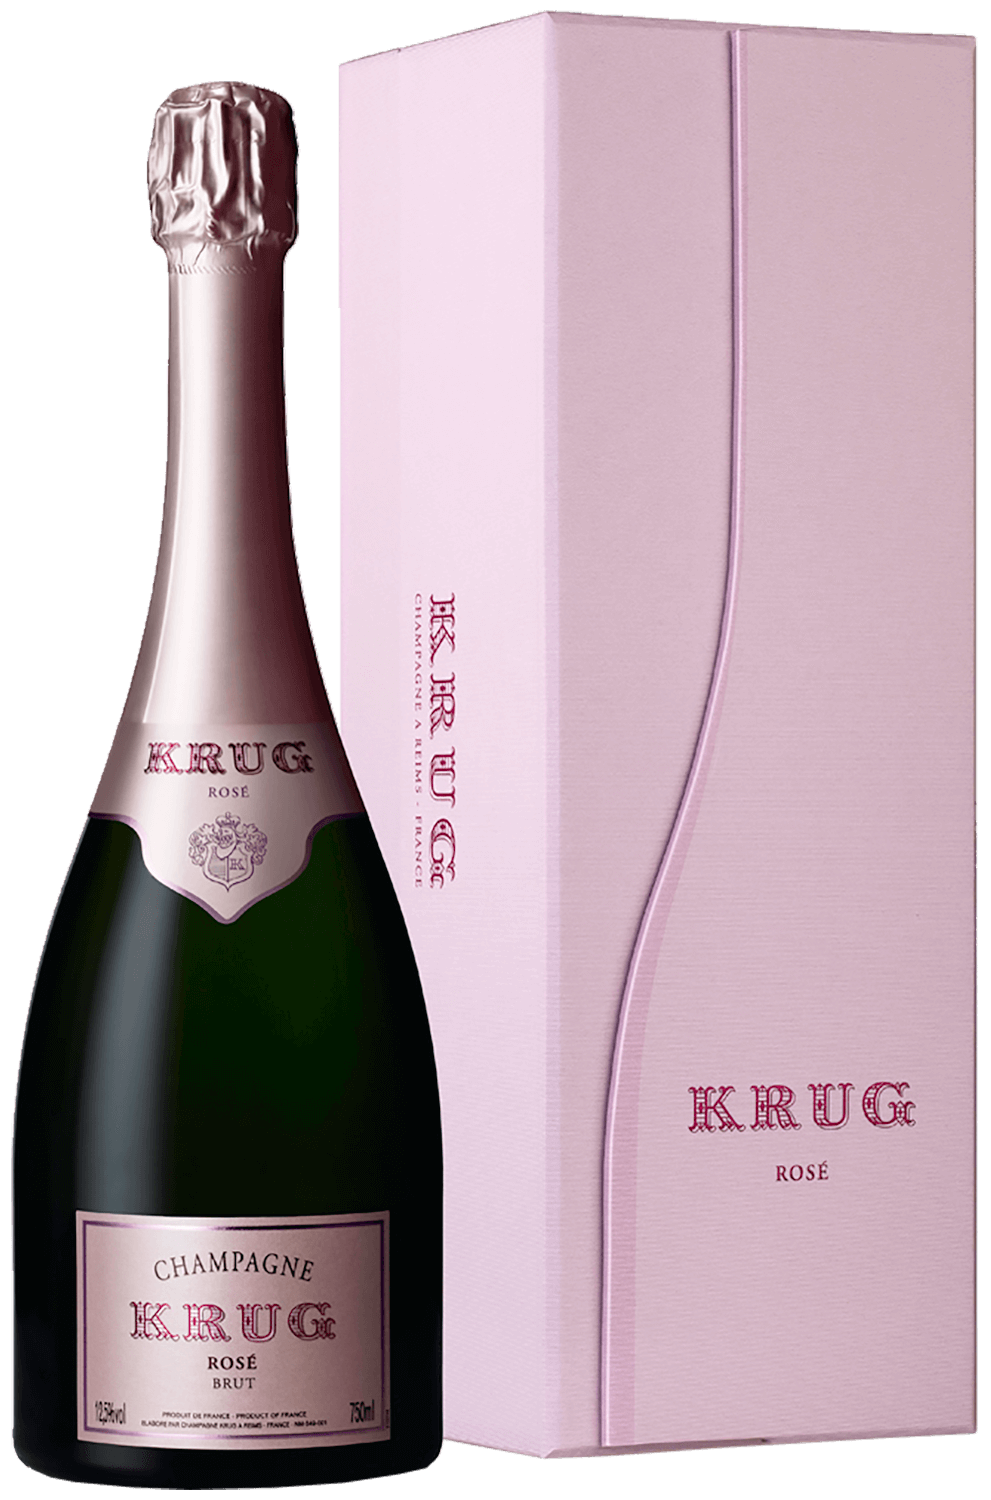 Krug Rose Brut Champagne AOC (in gift box) drappier carte d’or brut champagne aop in gift box with two glasses